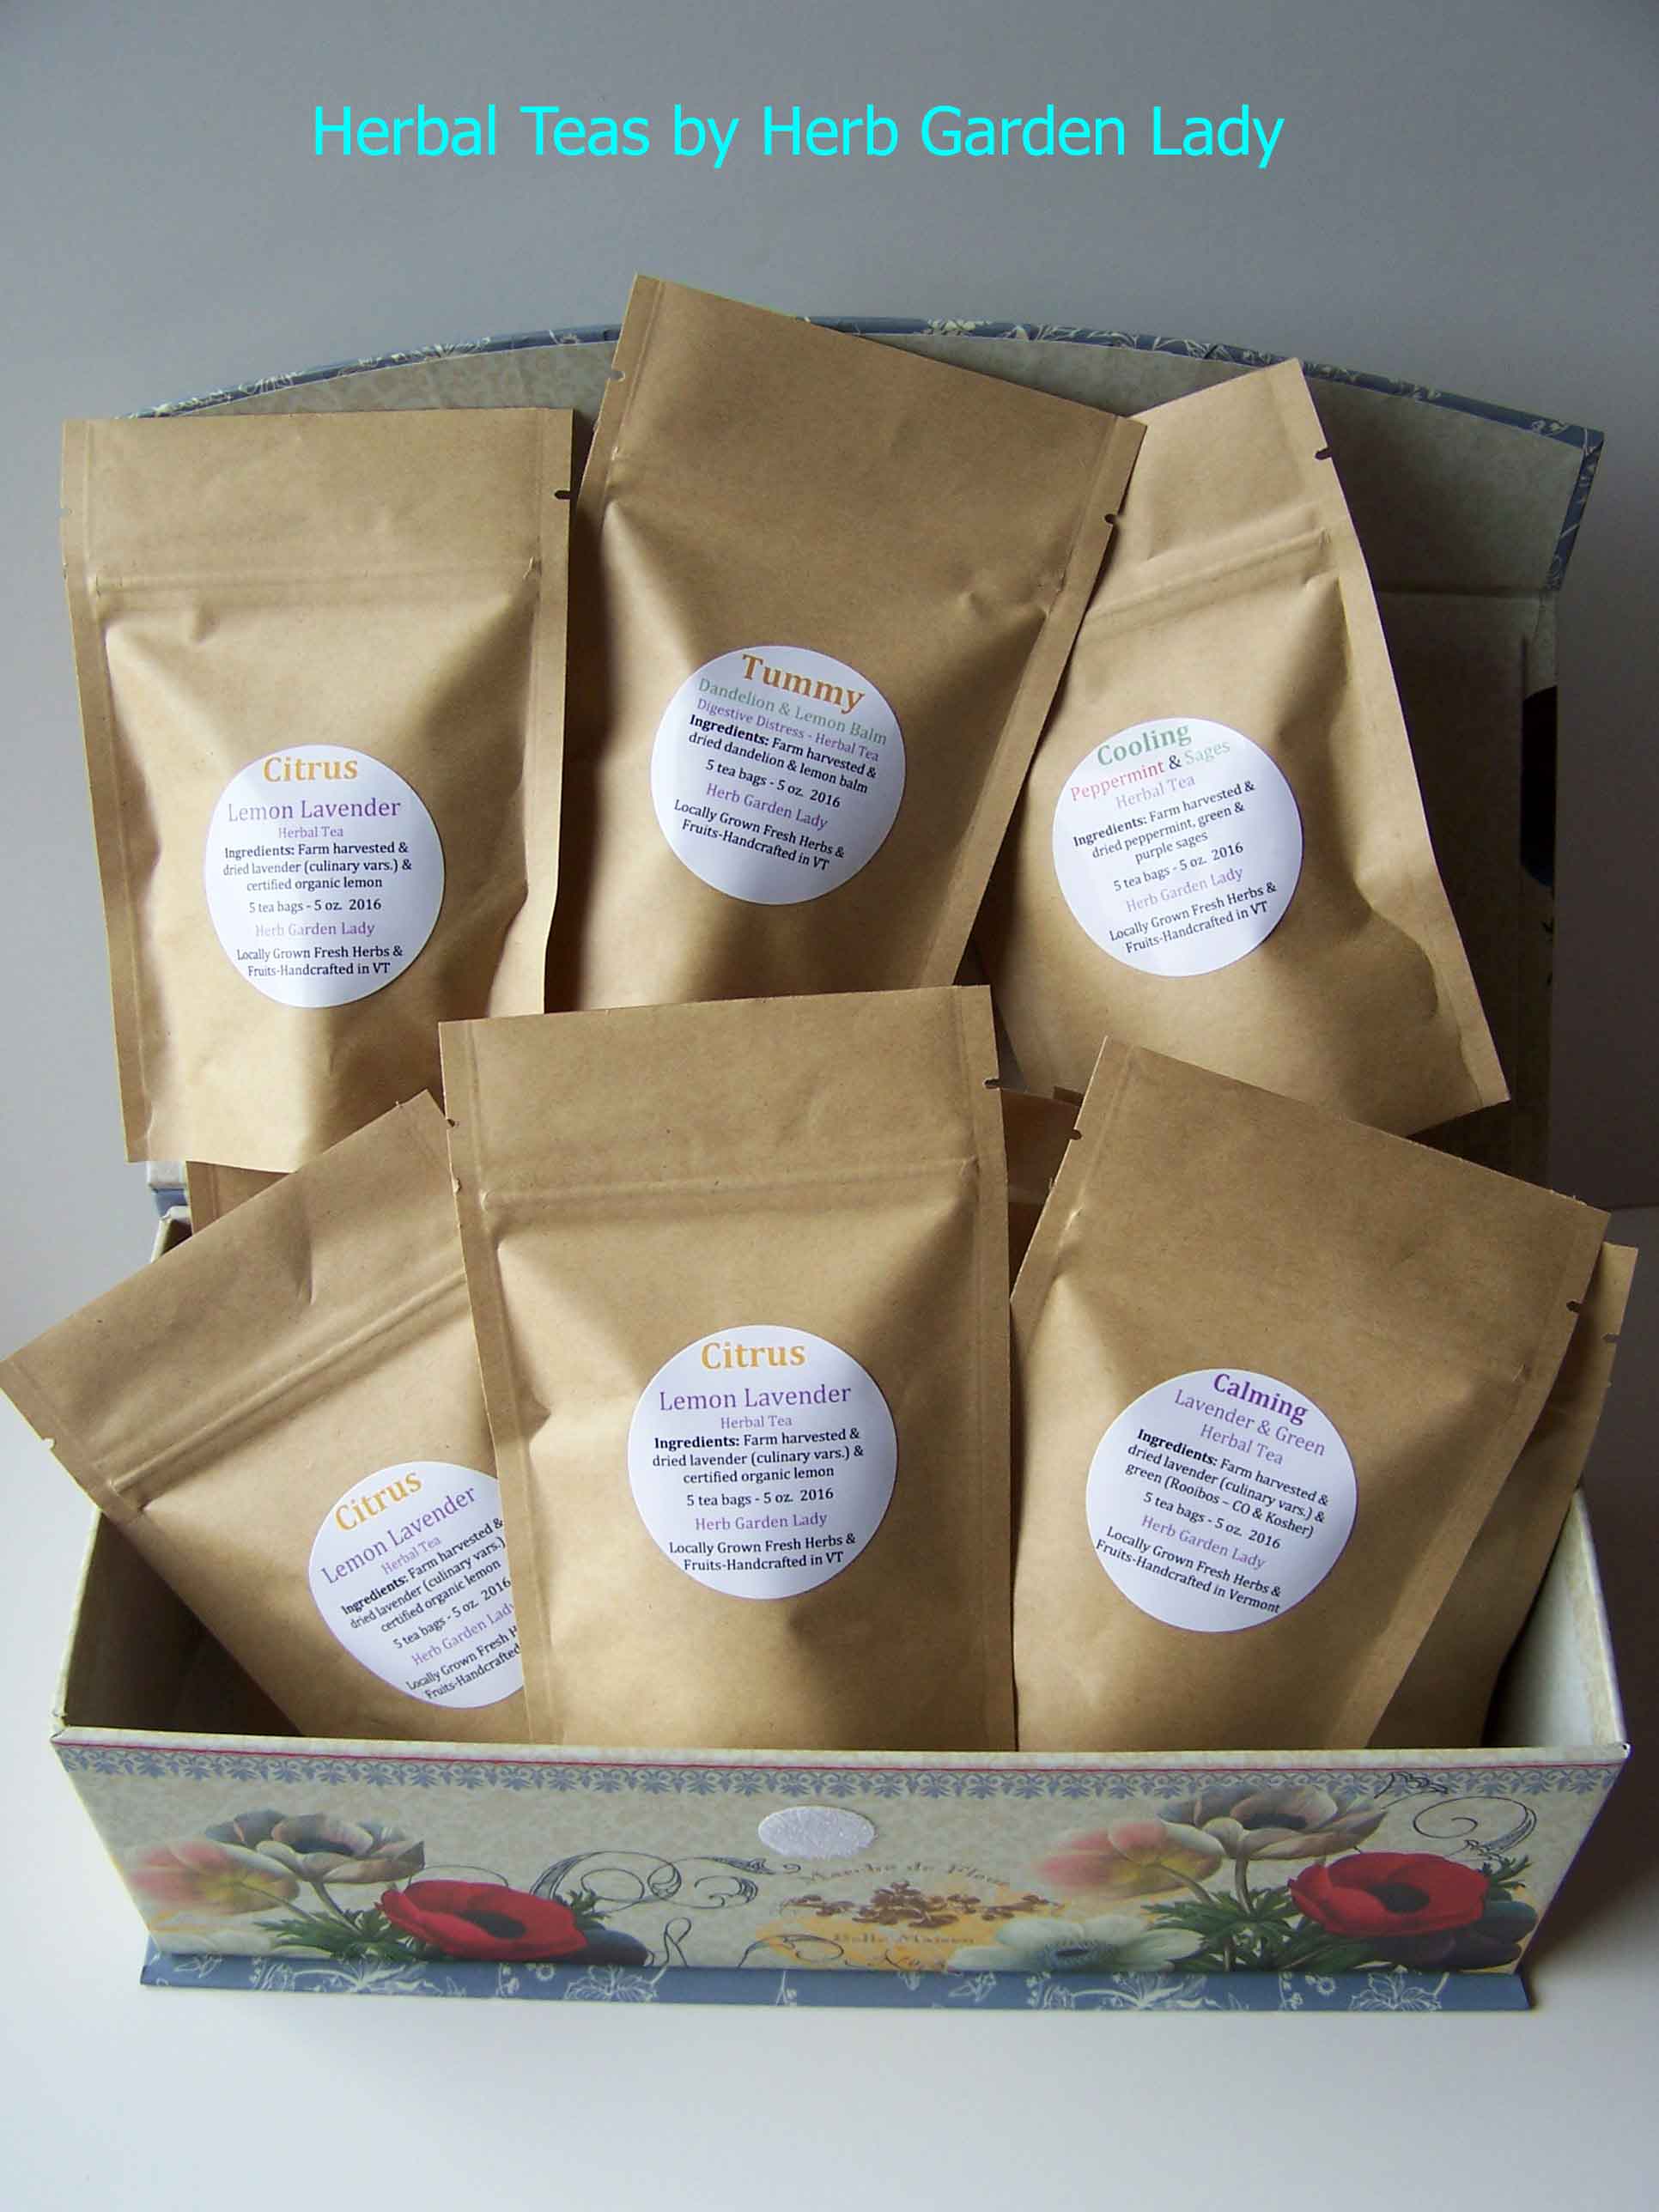 Herbal teas by Herb Garden Lady